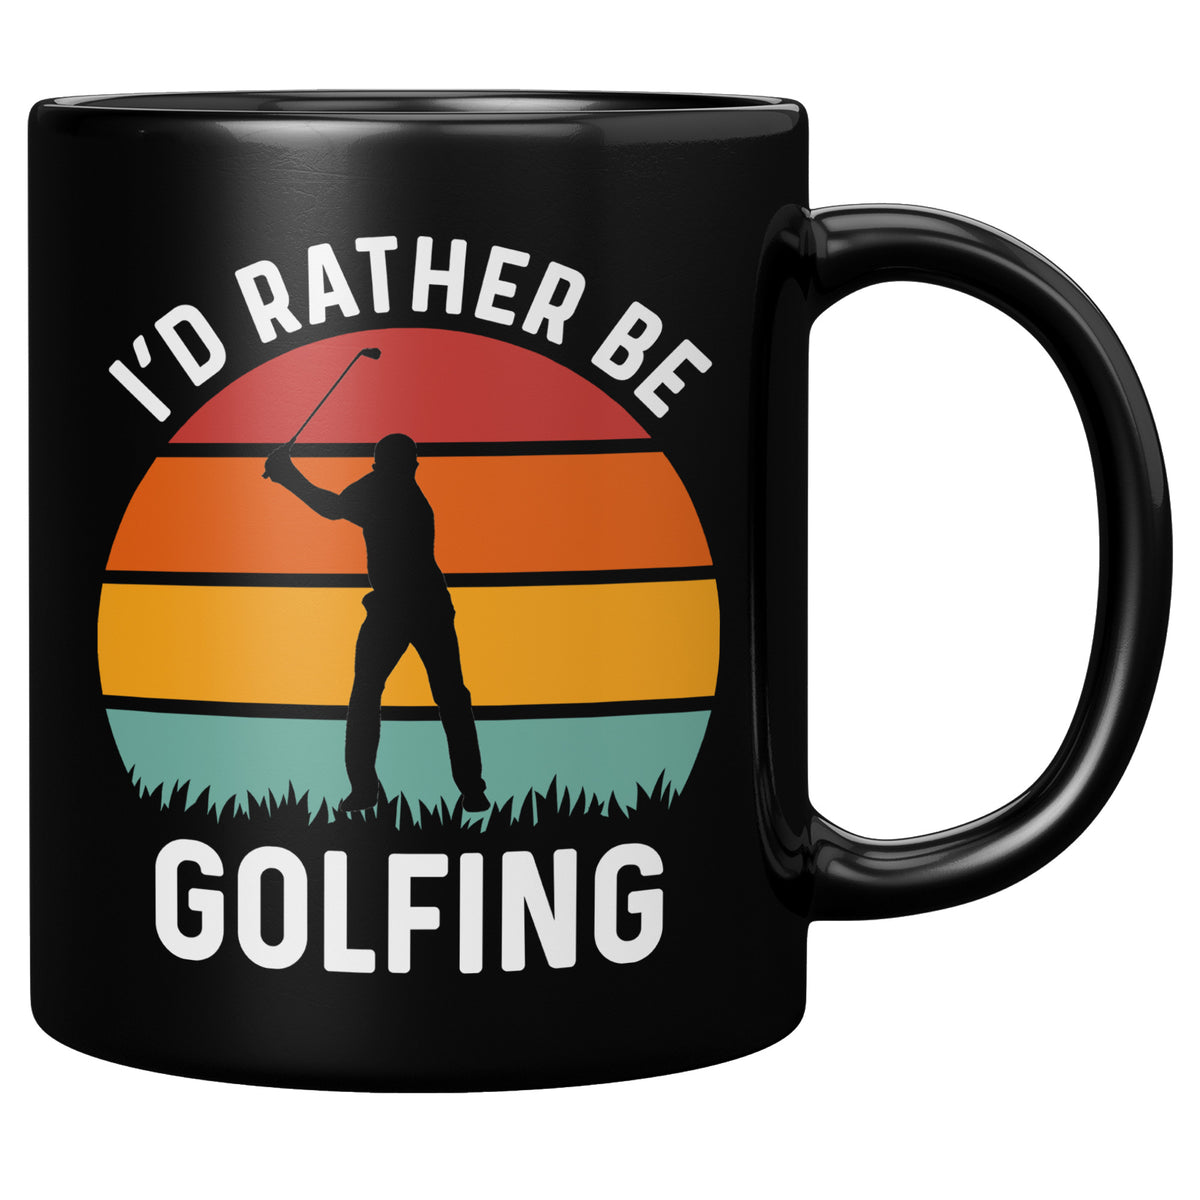 Golf Mug - I'd Rather Be Golfing